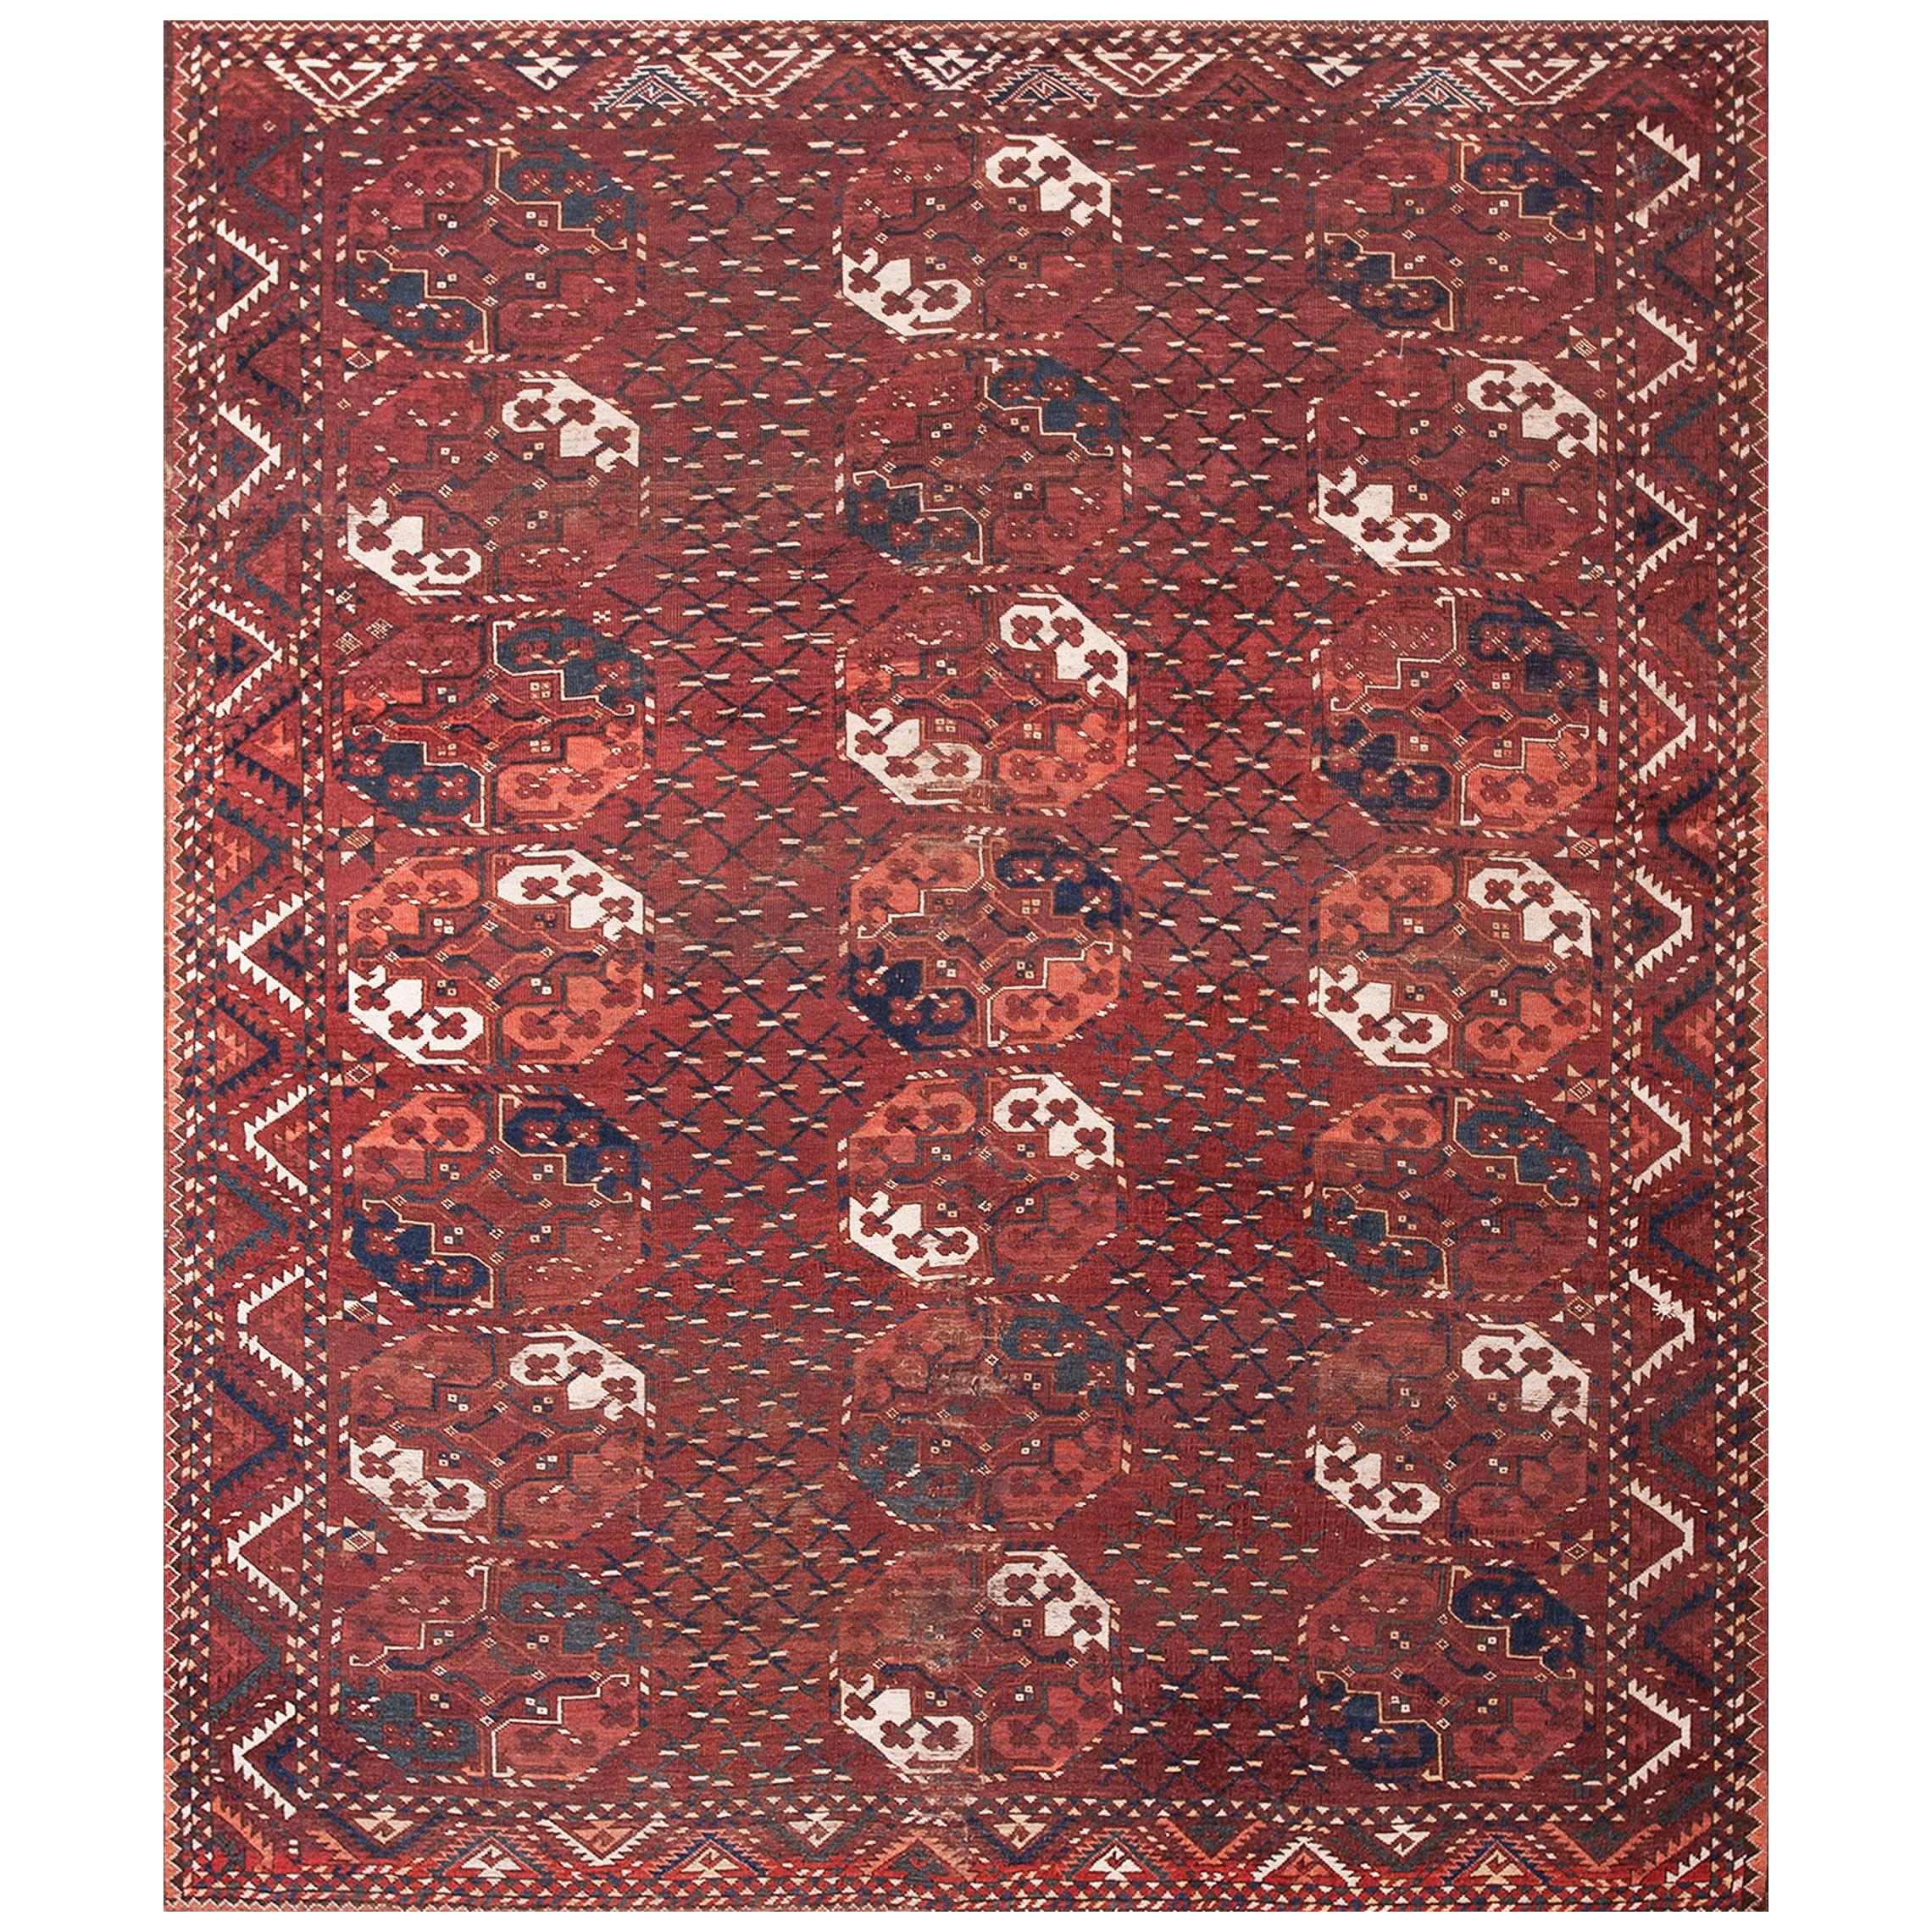 Mid 19th Century Central Asian Ersari - Beshir Main Carpet (6'6" x 8'-198 x 244)